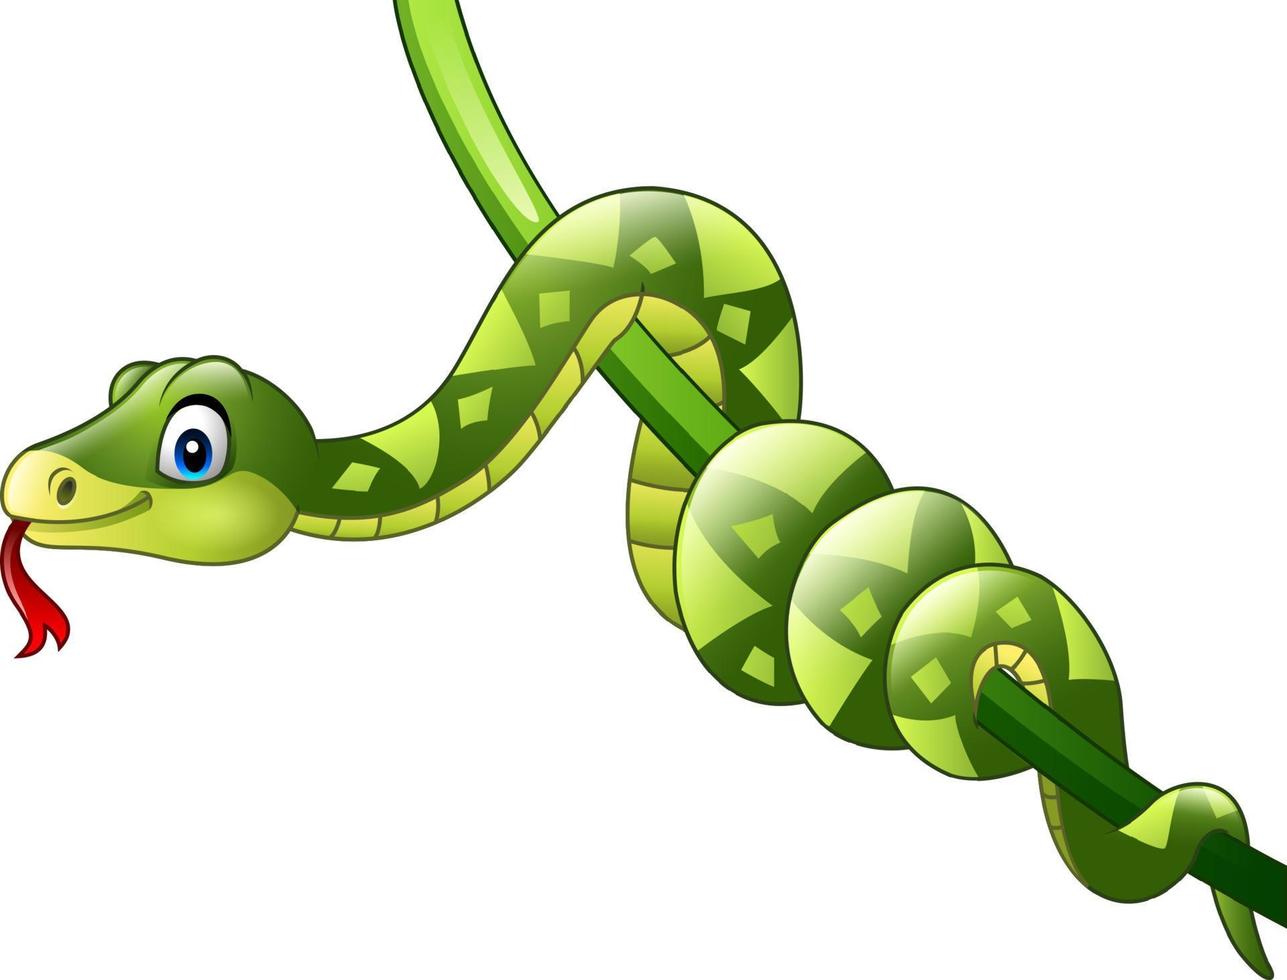 Cartoon green snake on vine vector